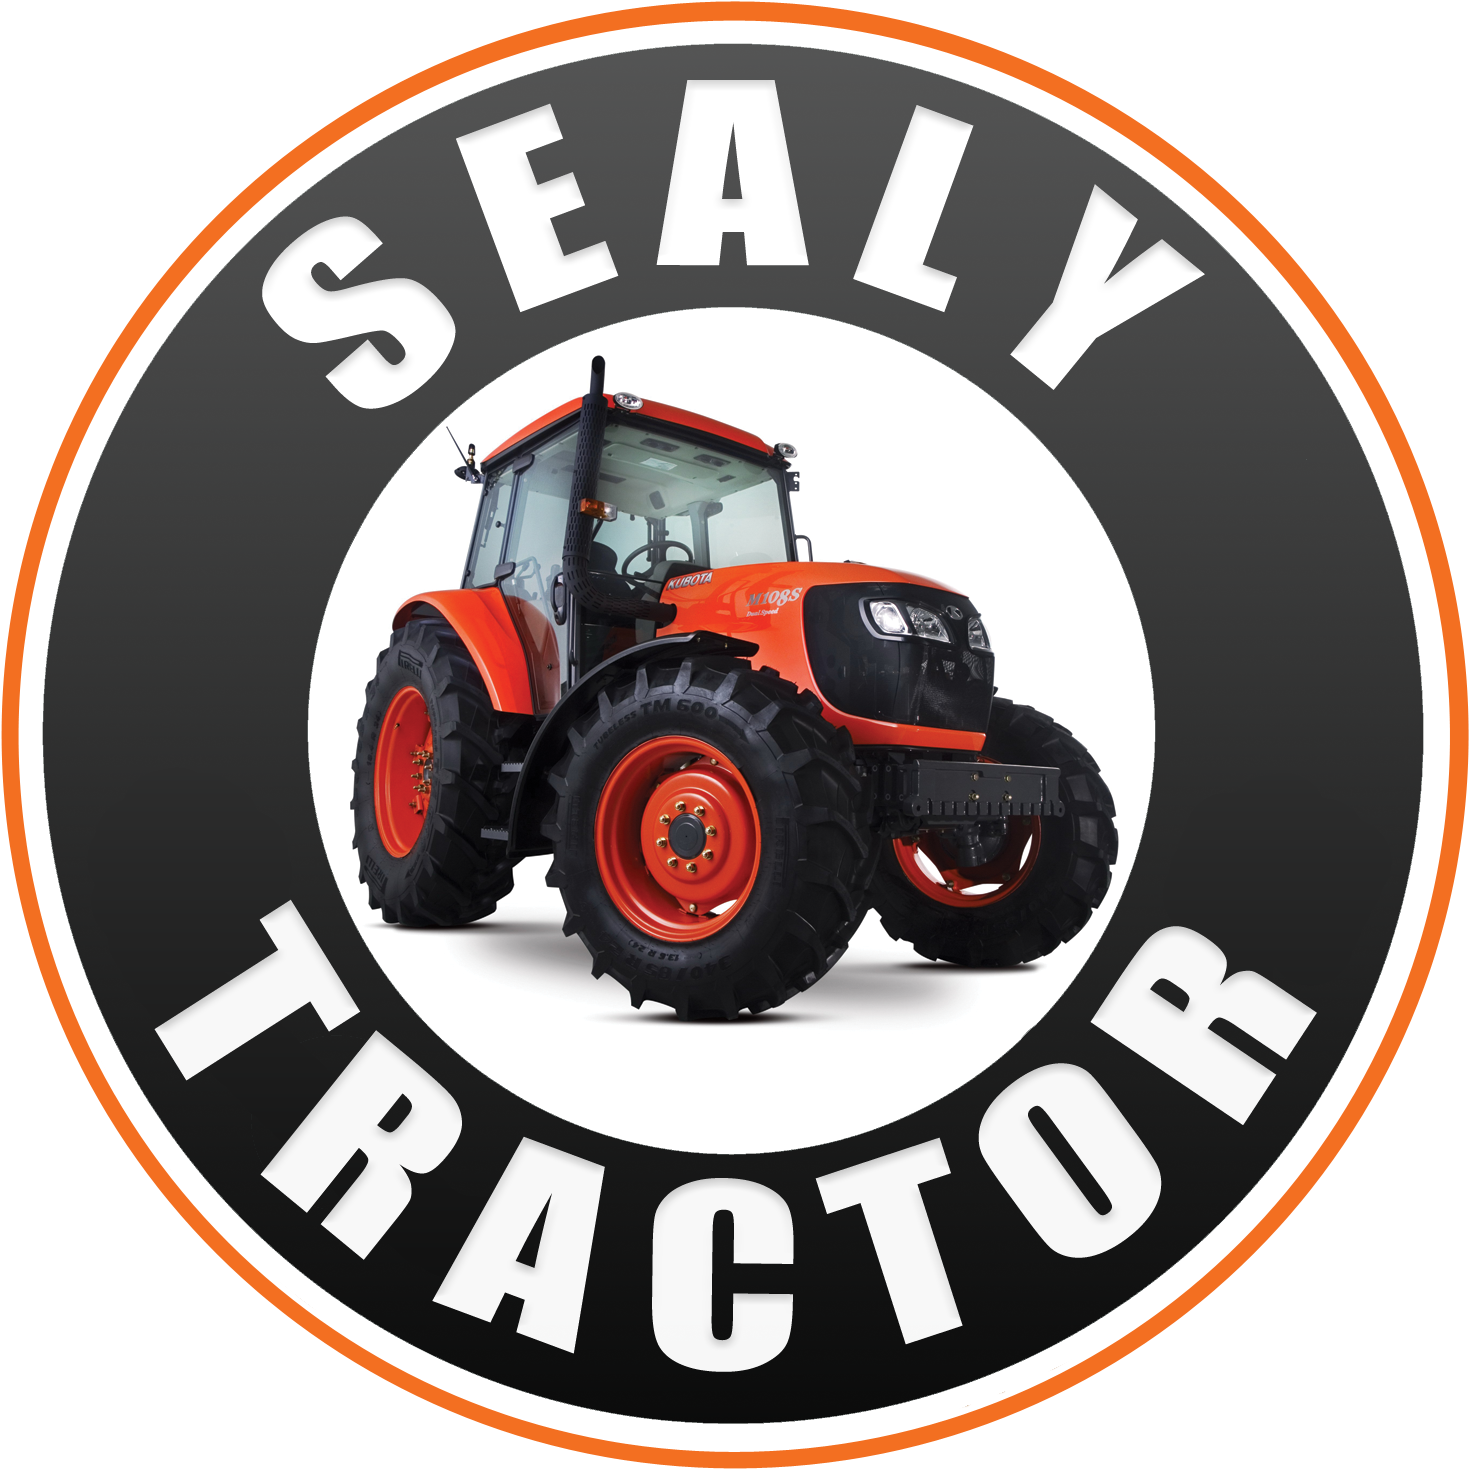 Sealy Tractor - Farm Accidents - Tractor Accidents - Pit Bull Jiu Jitsu (1491x1500)